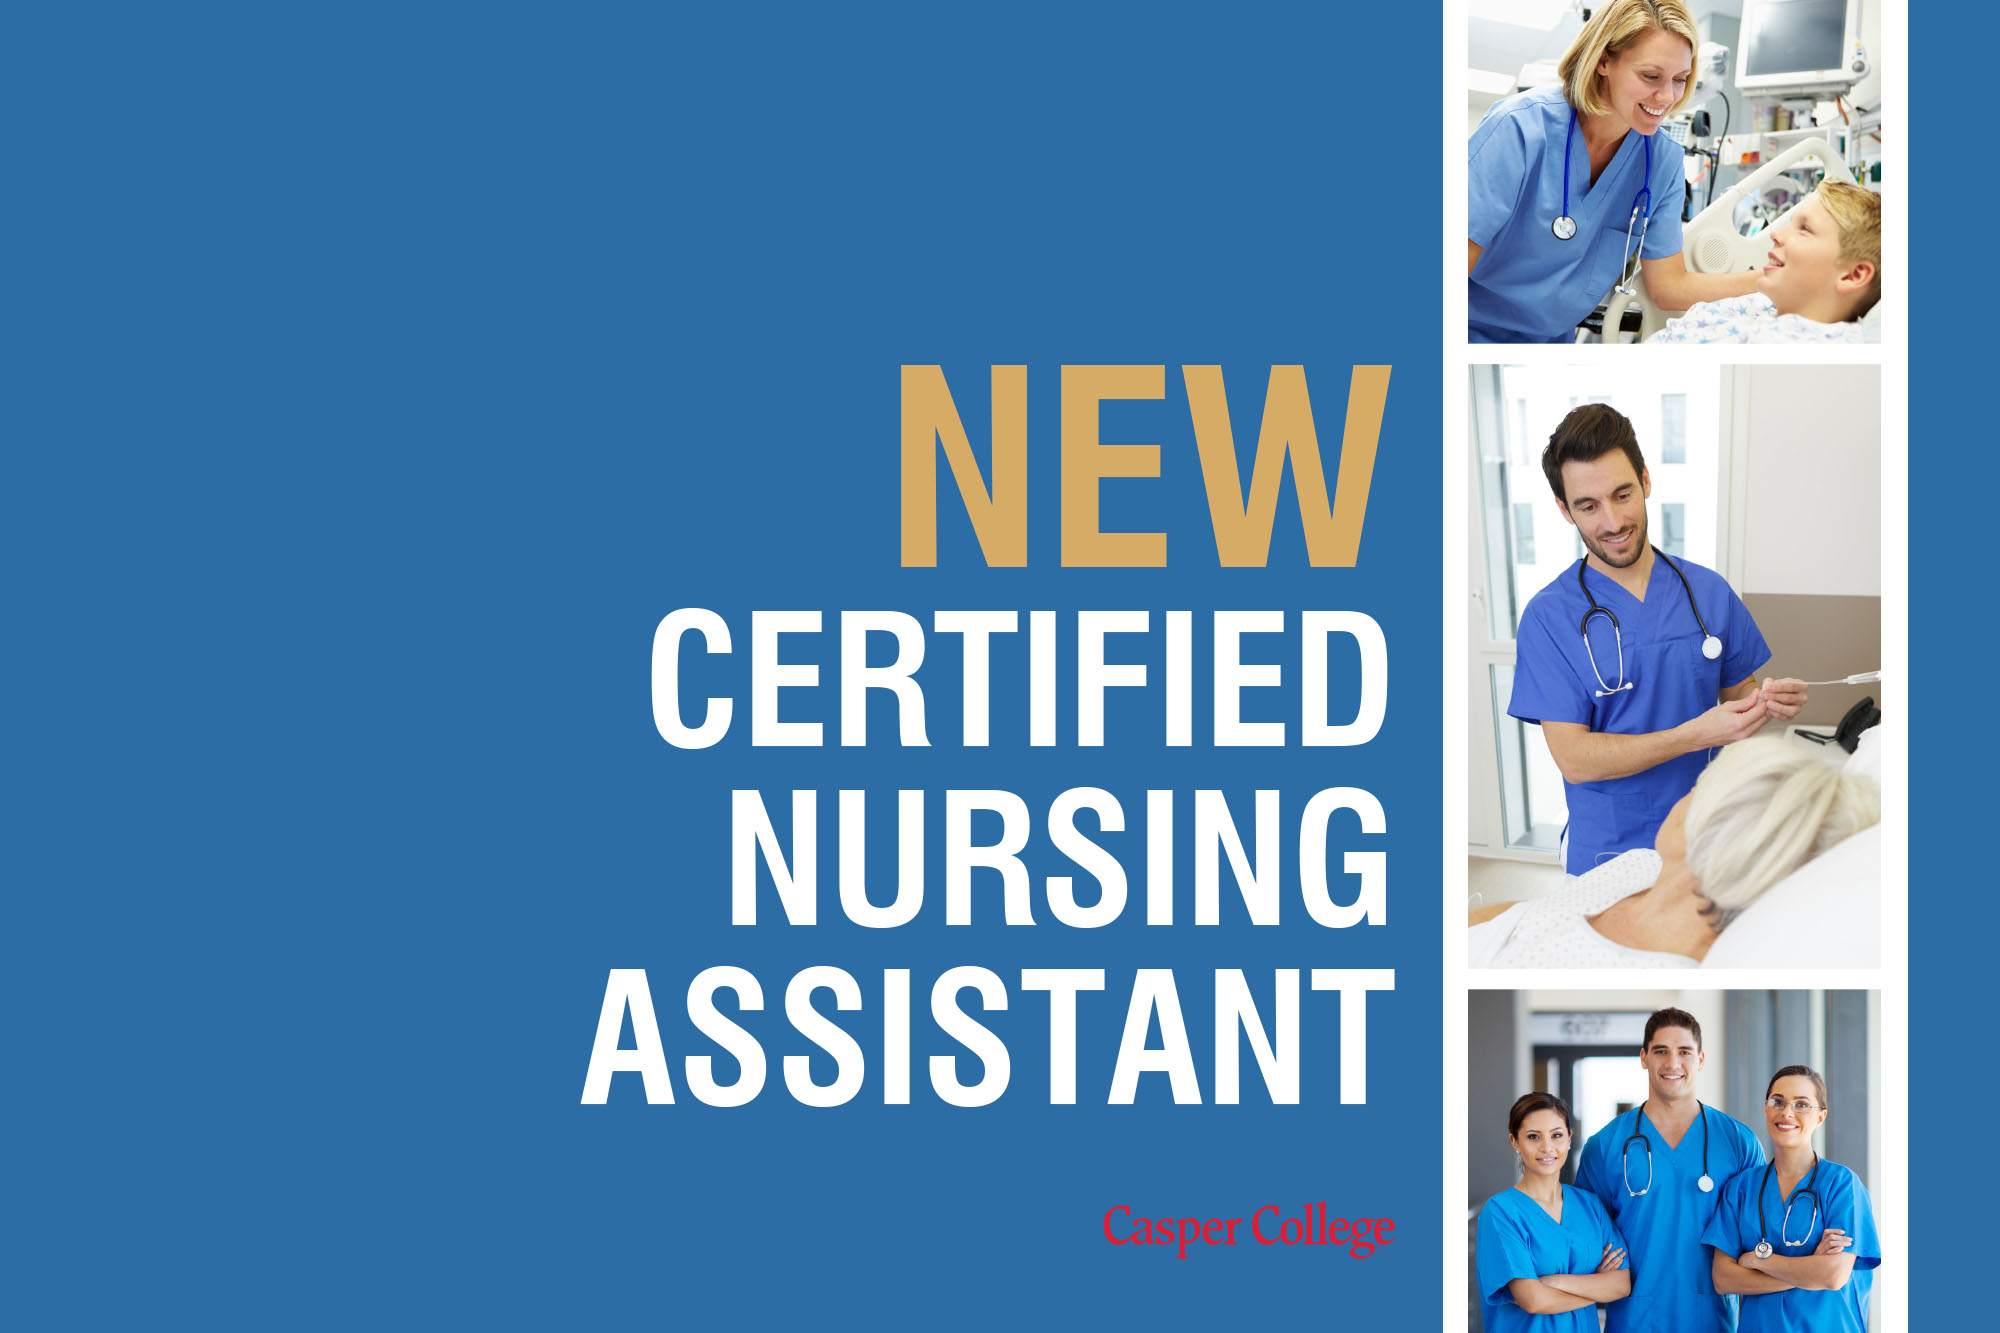 Image for Certified Nursing Assistant press release.